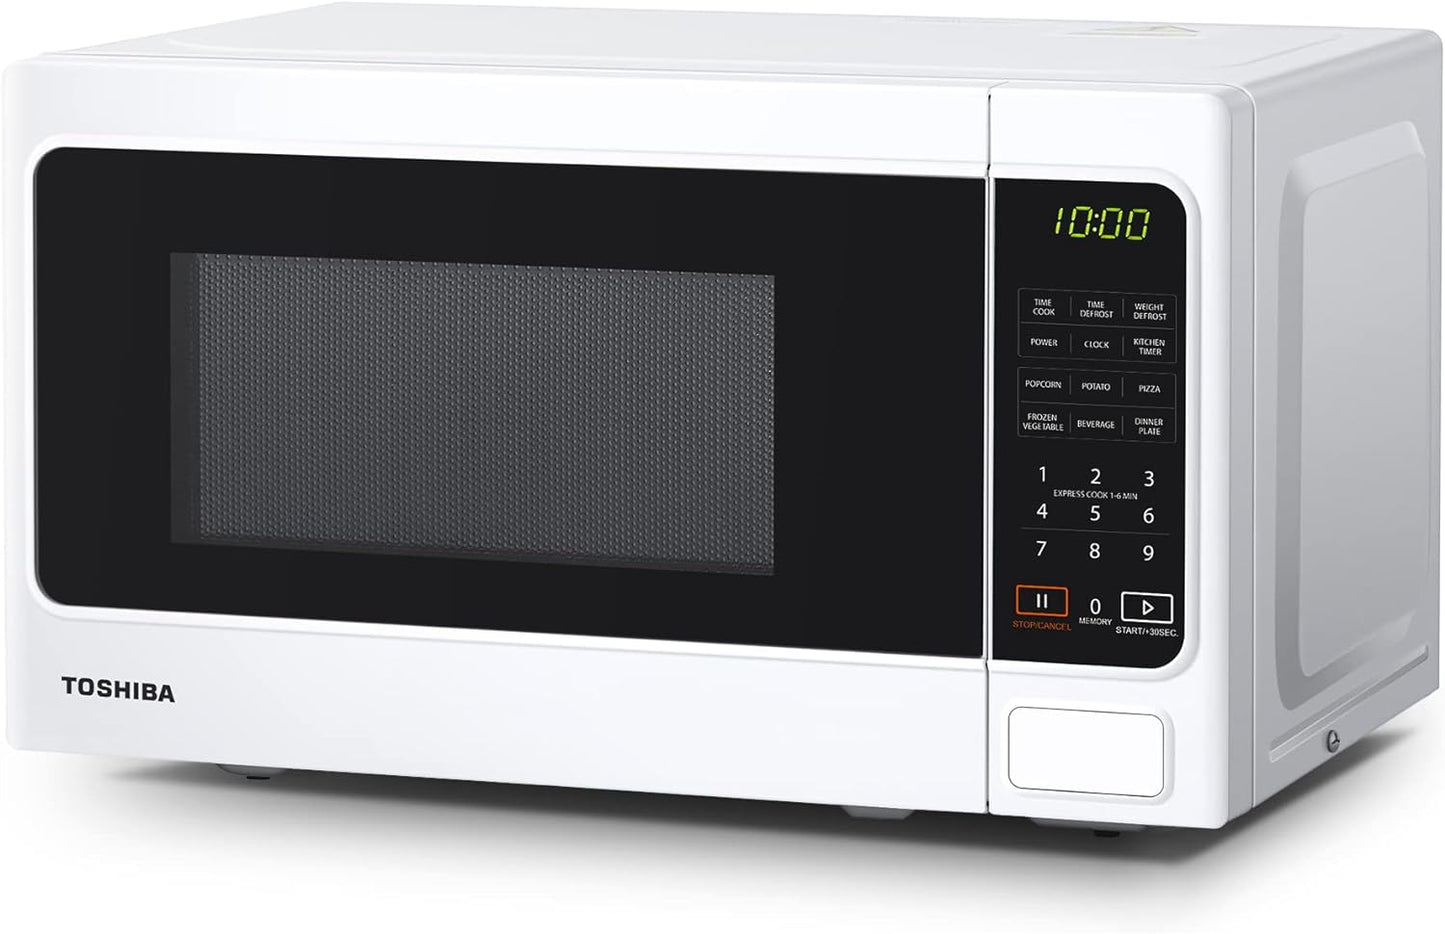 Toshiba Microwave Oven MM-EM20P(WH) 20L Digital 800W, 6 Preset Recipes, Procedural Memory, Auto Defrost, Digital Display, Modern Finish – White